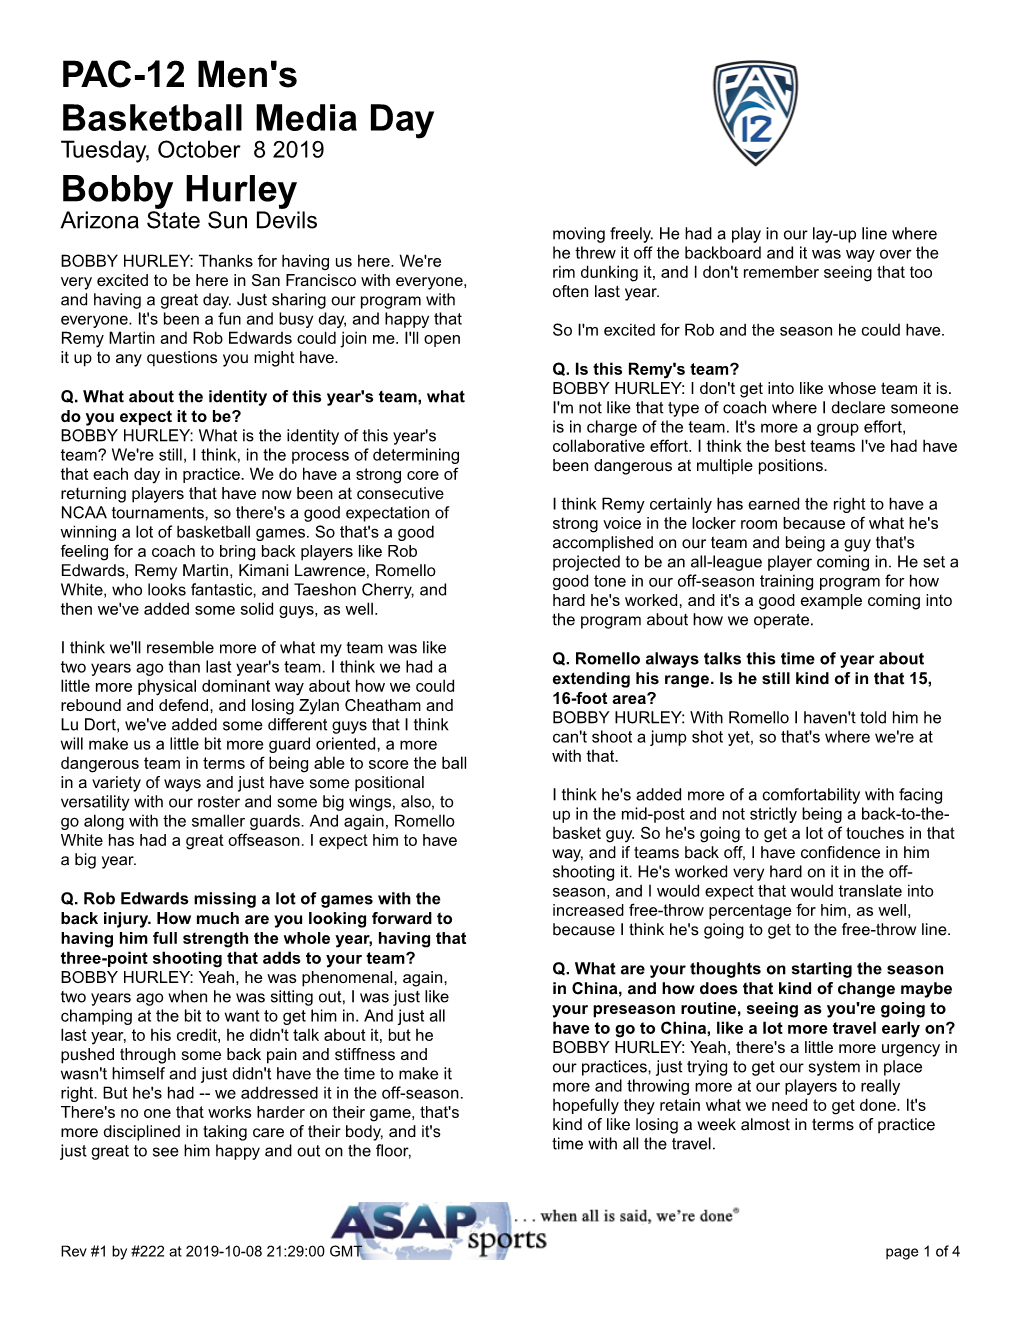 PAC-12 Men's Basketball Media Day Bobby Hurley